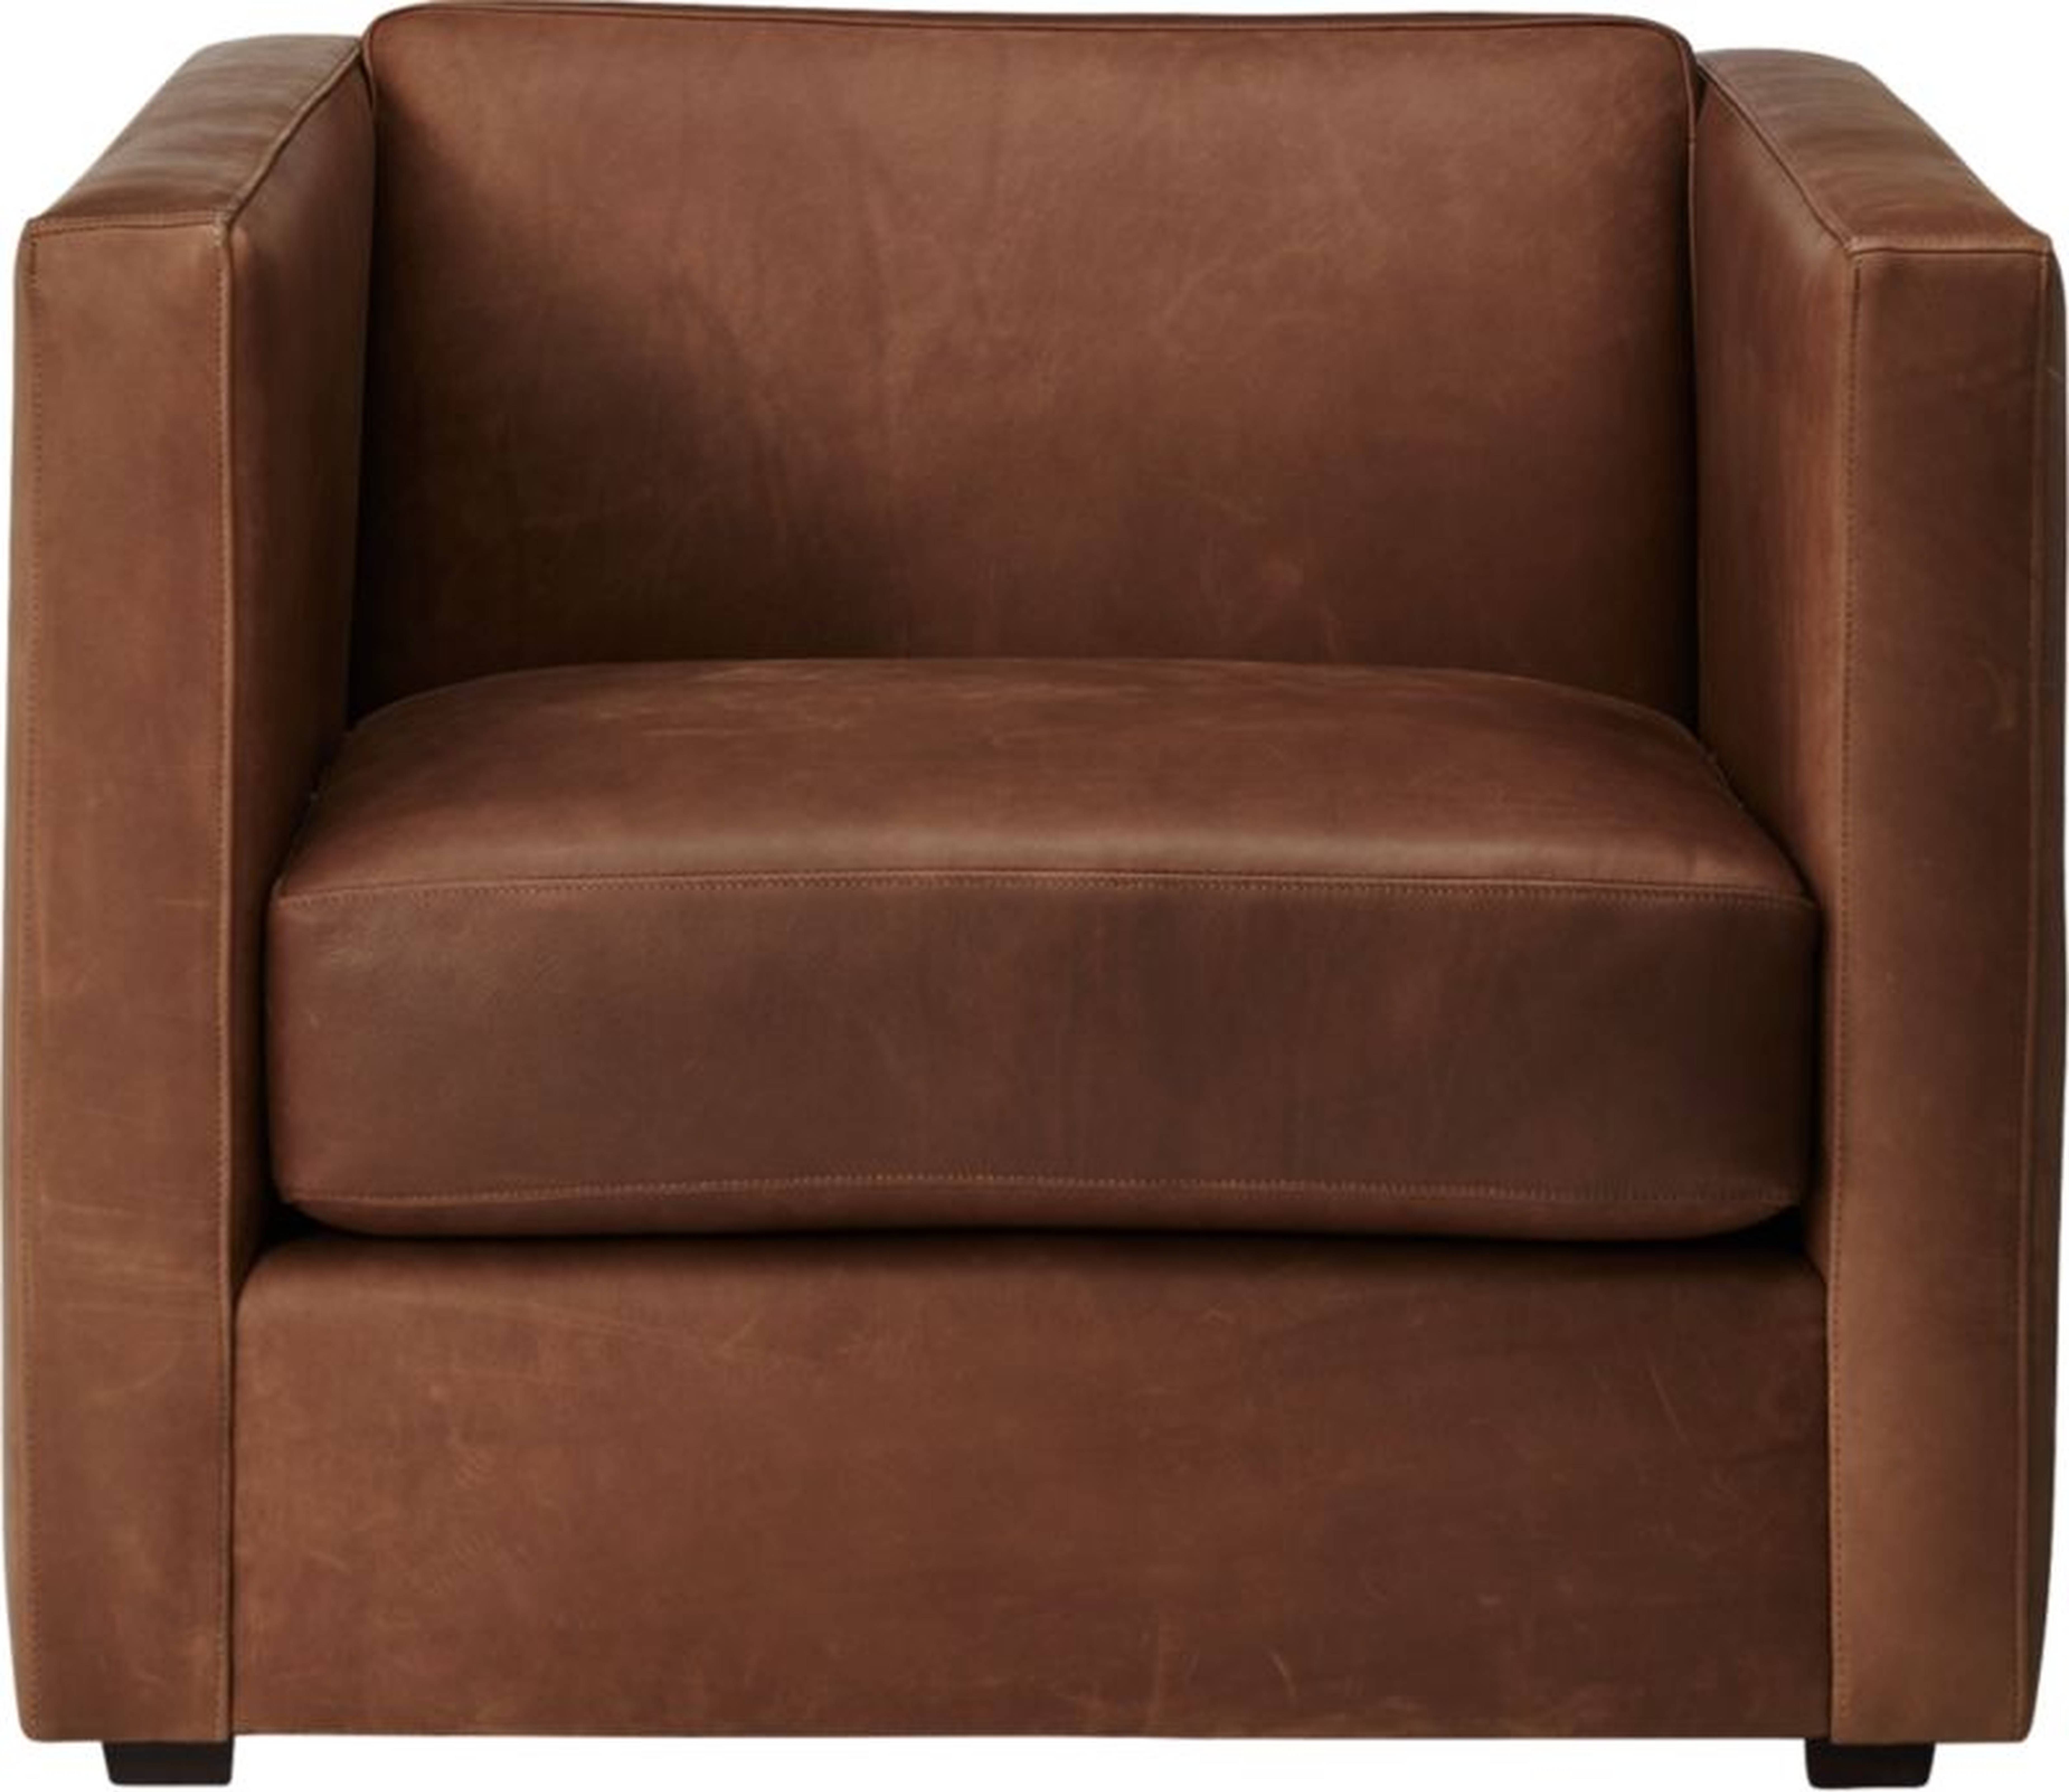 Club Leather Chair - CB2